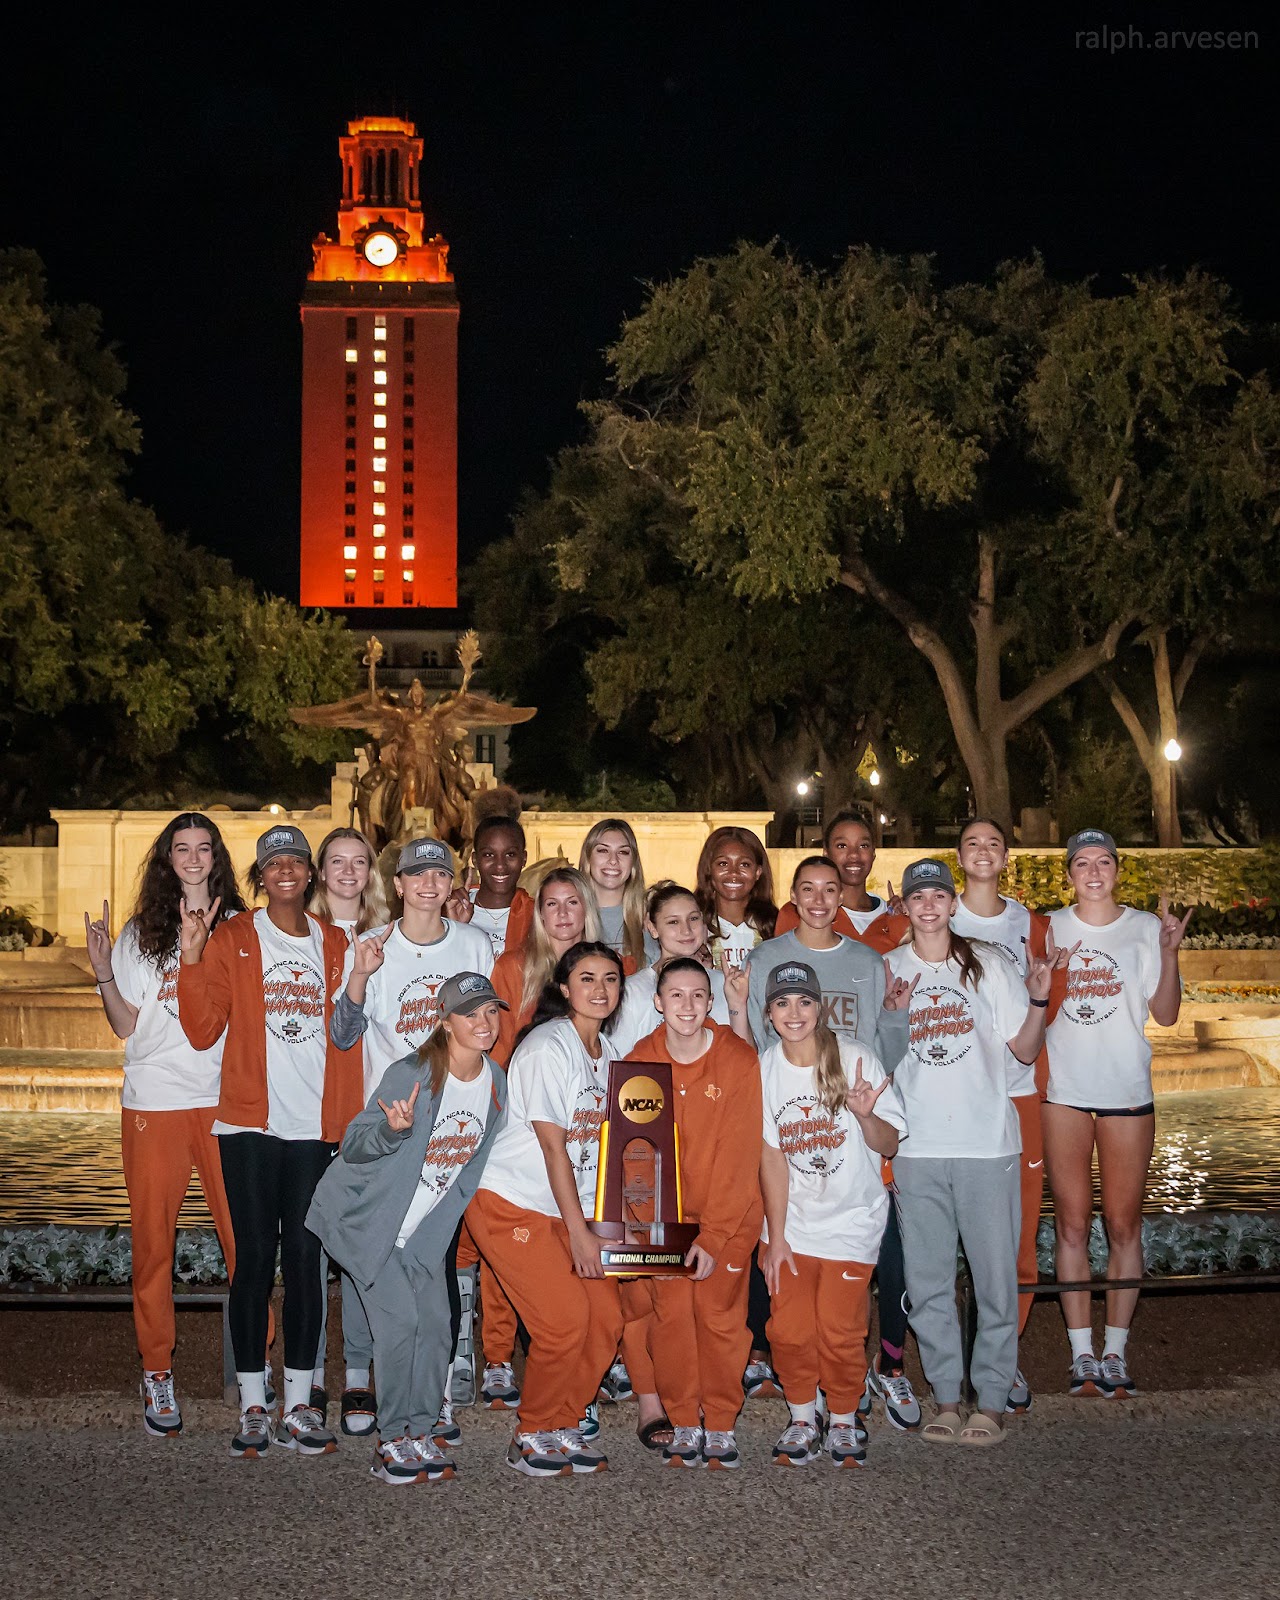 University of Texas Volleyball | Texas Review | Ralph Arvesen